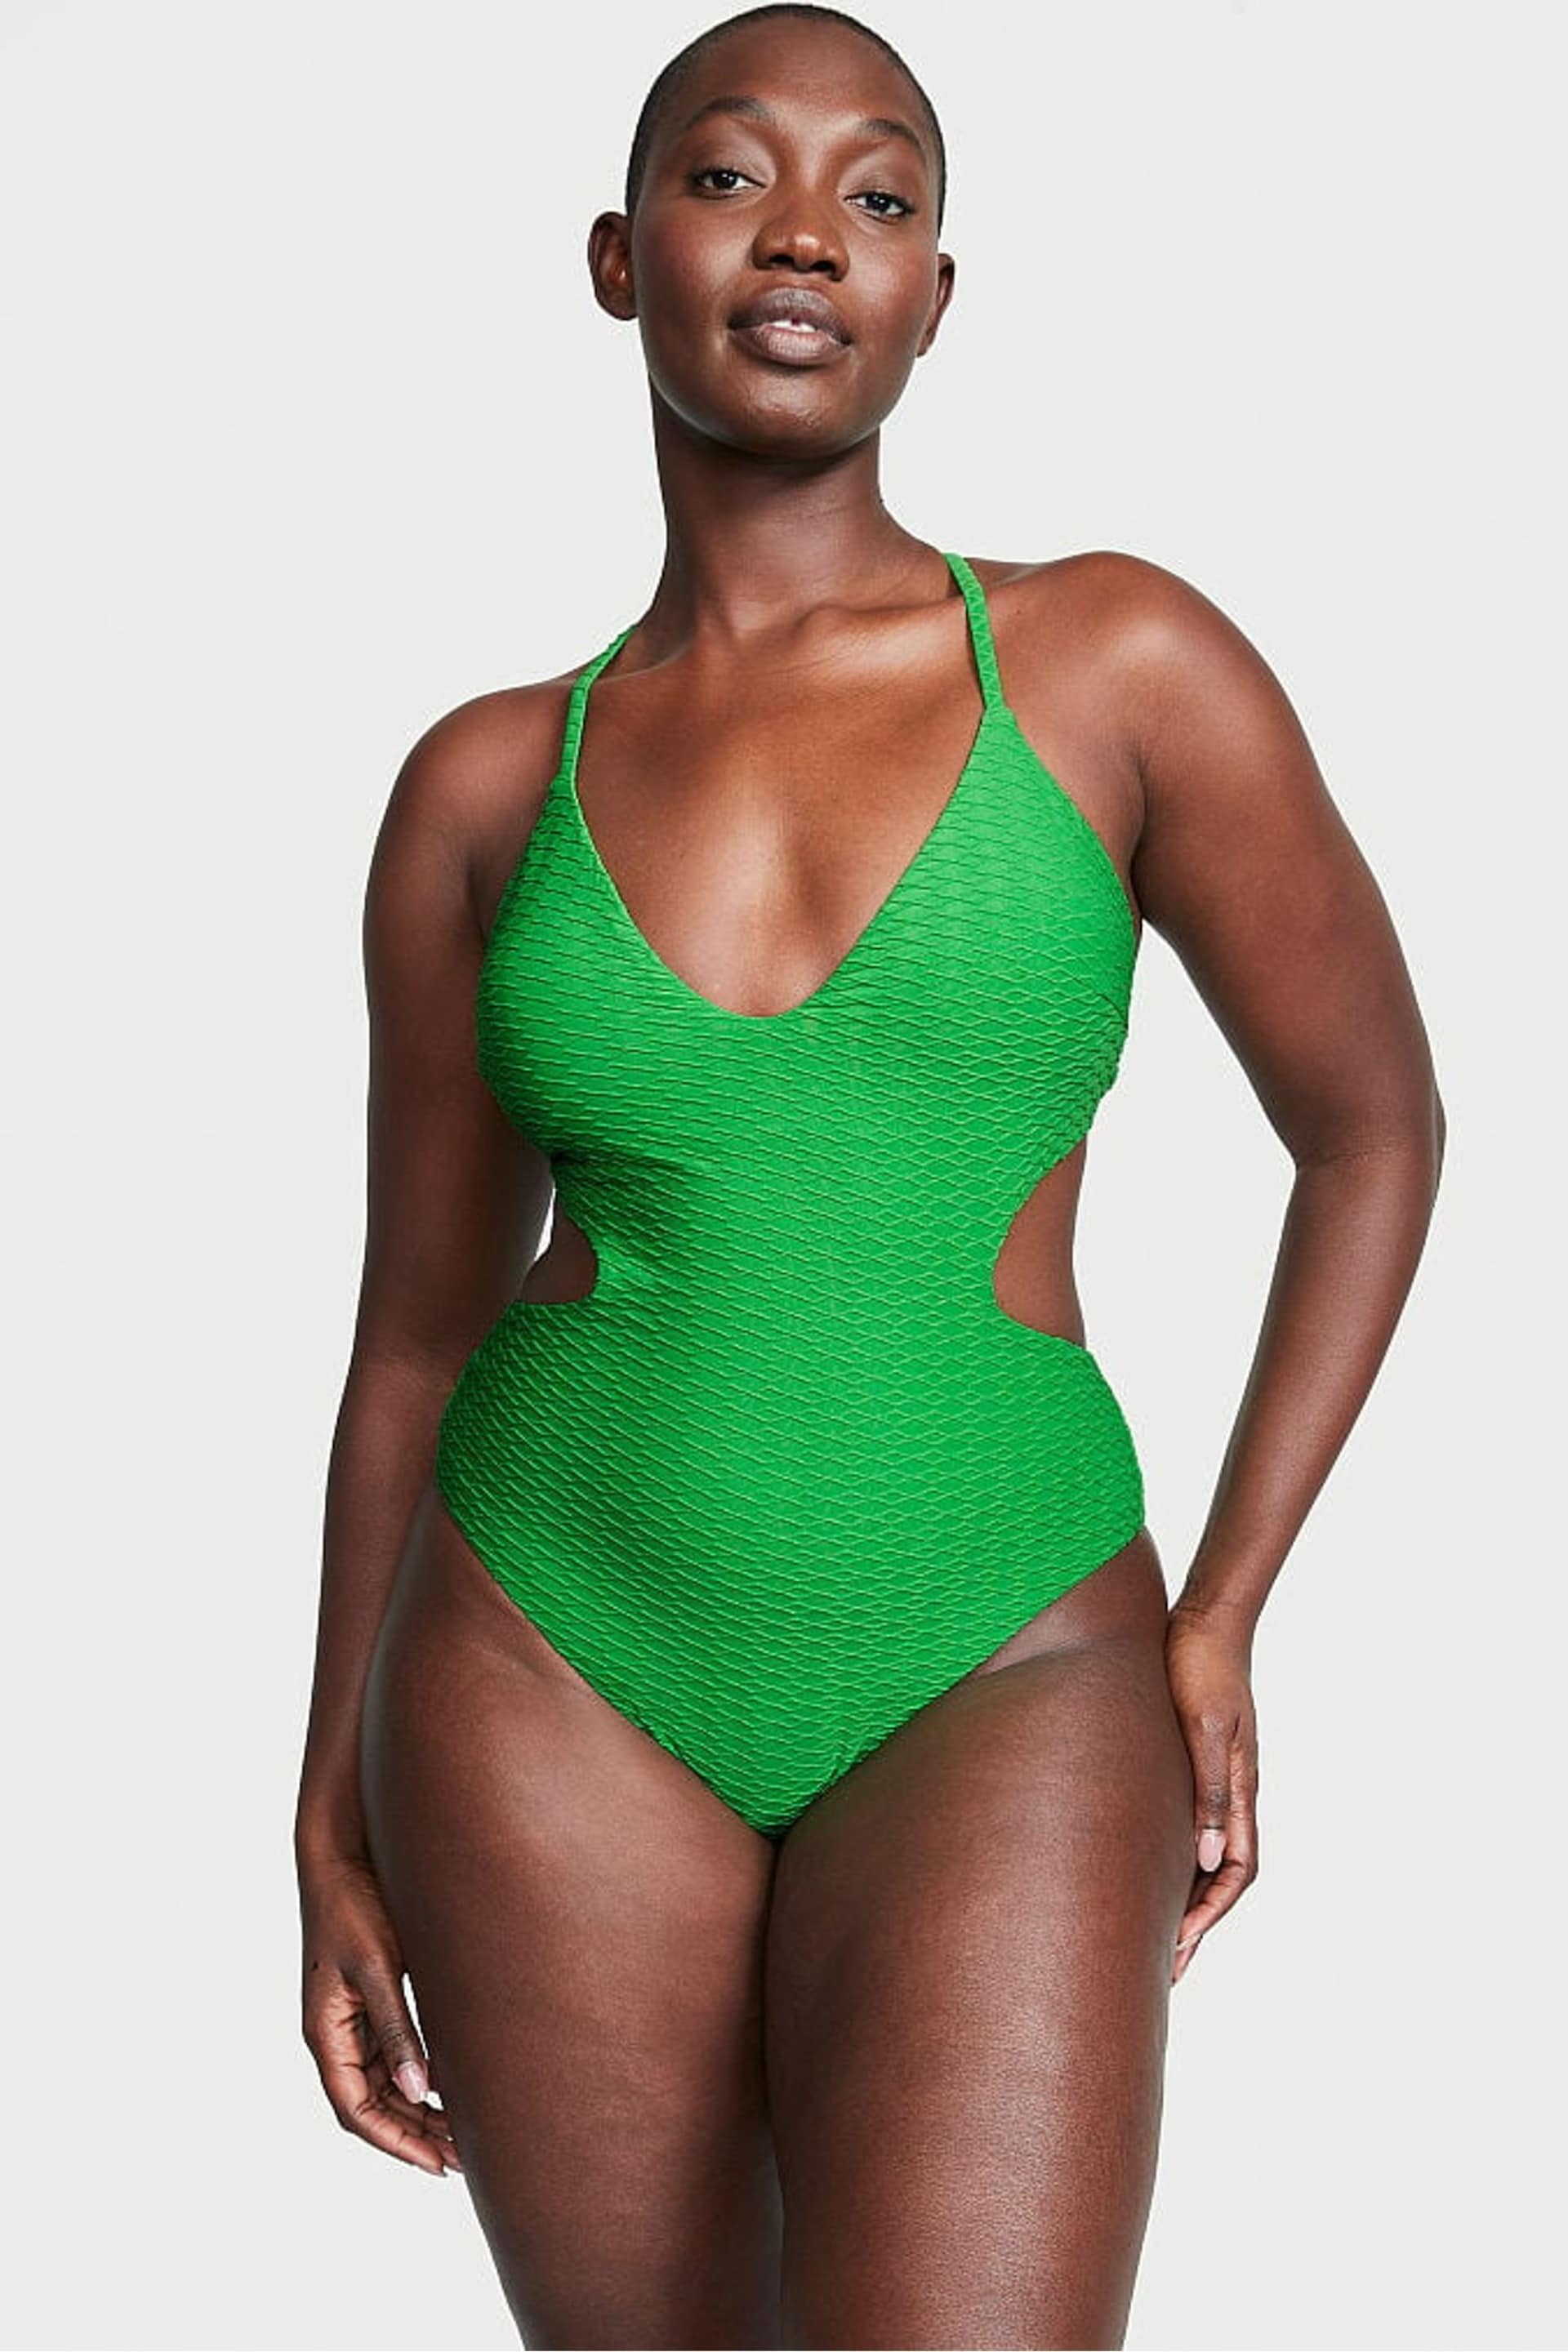 Victoria's Secret Green Fishnet Swimsuit - Image 1 of 4